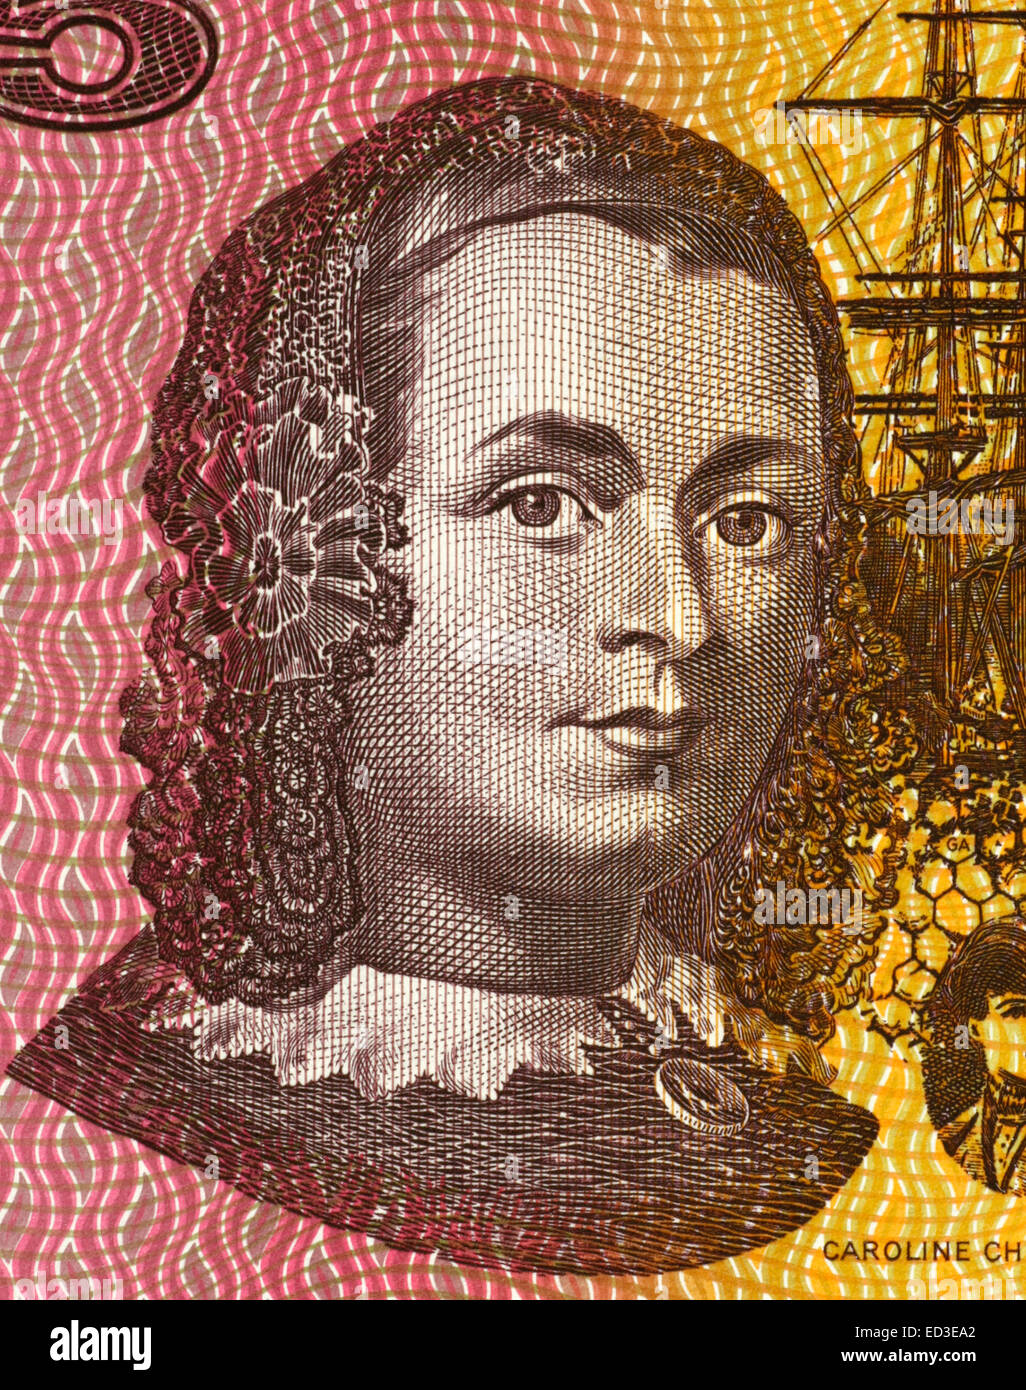 Caroline Chisholm (1808-1877) on 5 Dollars 1967 banknote from Australia. Progressive 19th century English humanitarian. Stock Photo